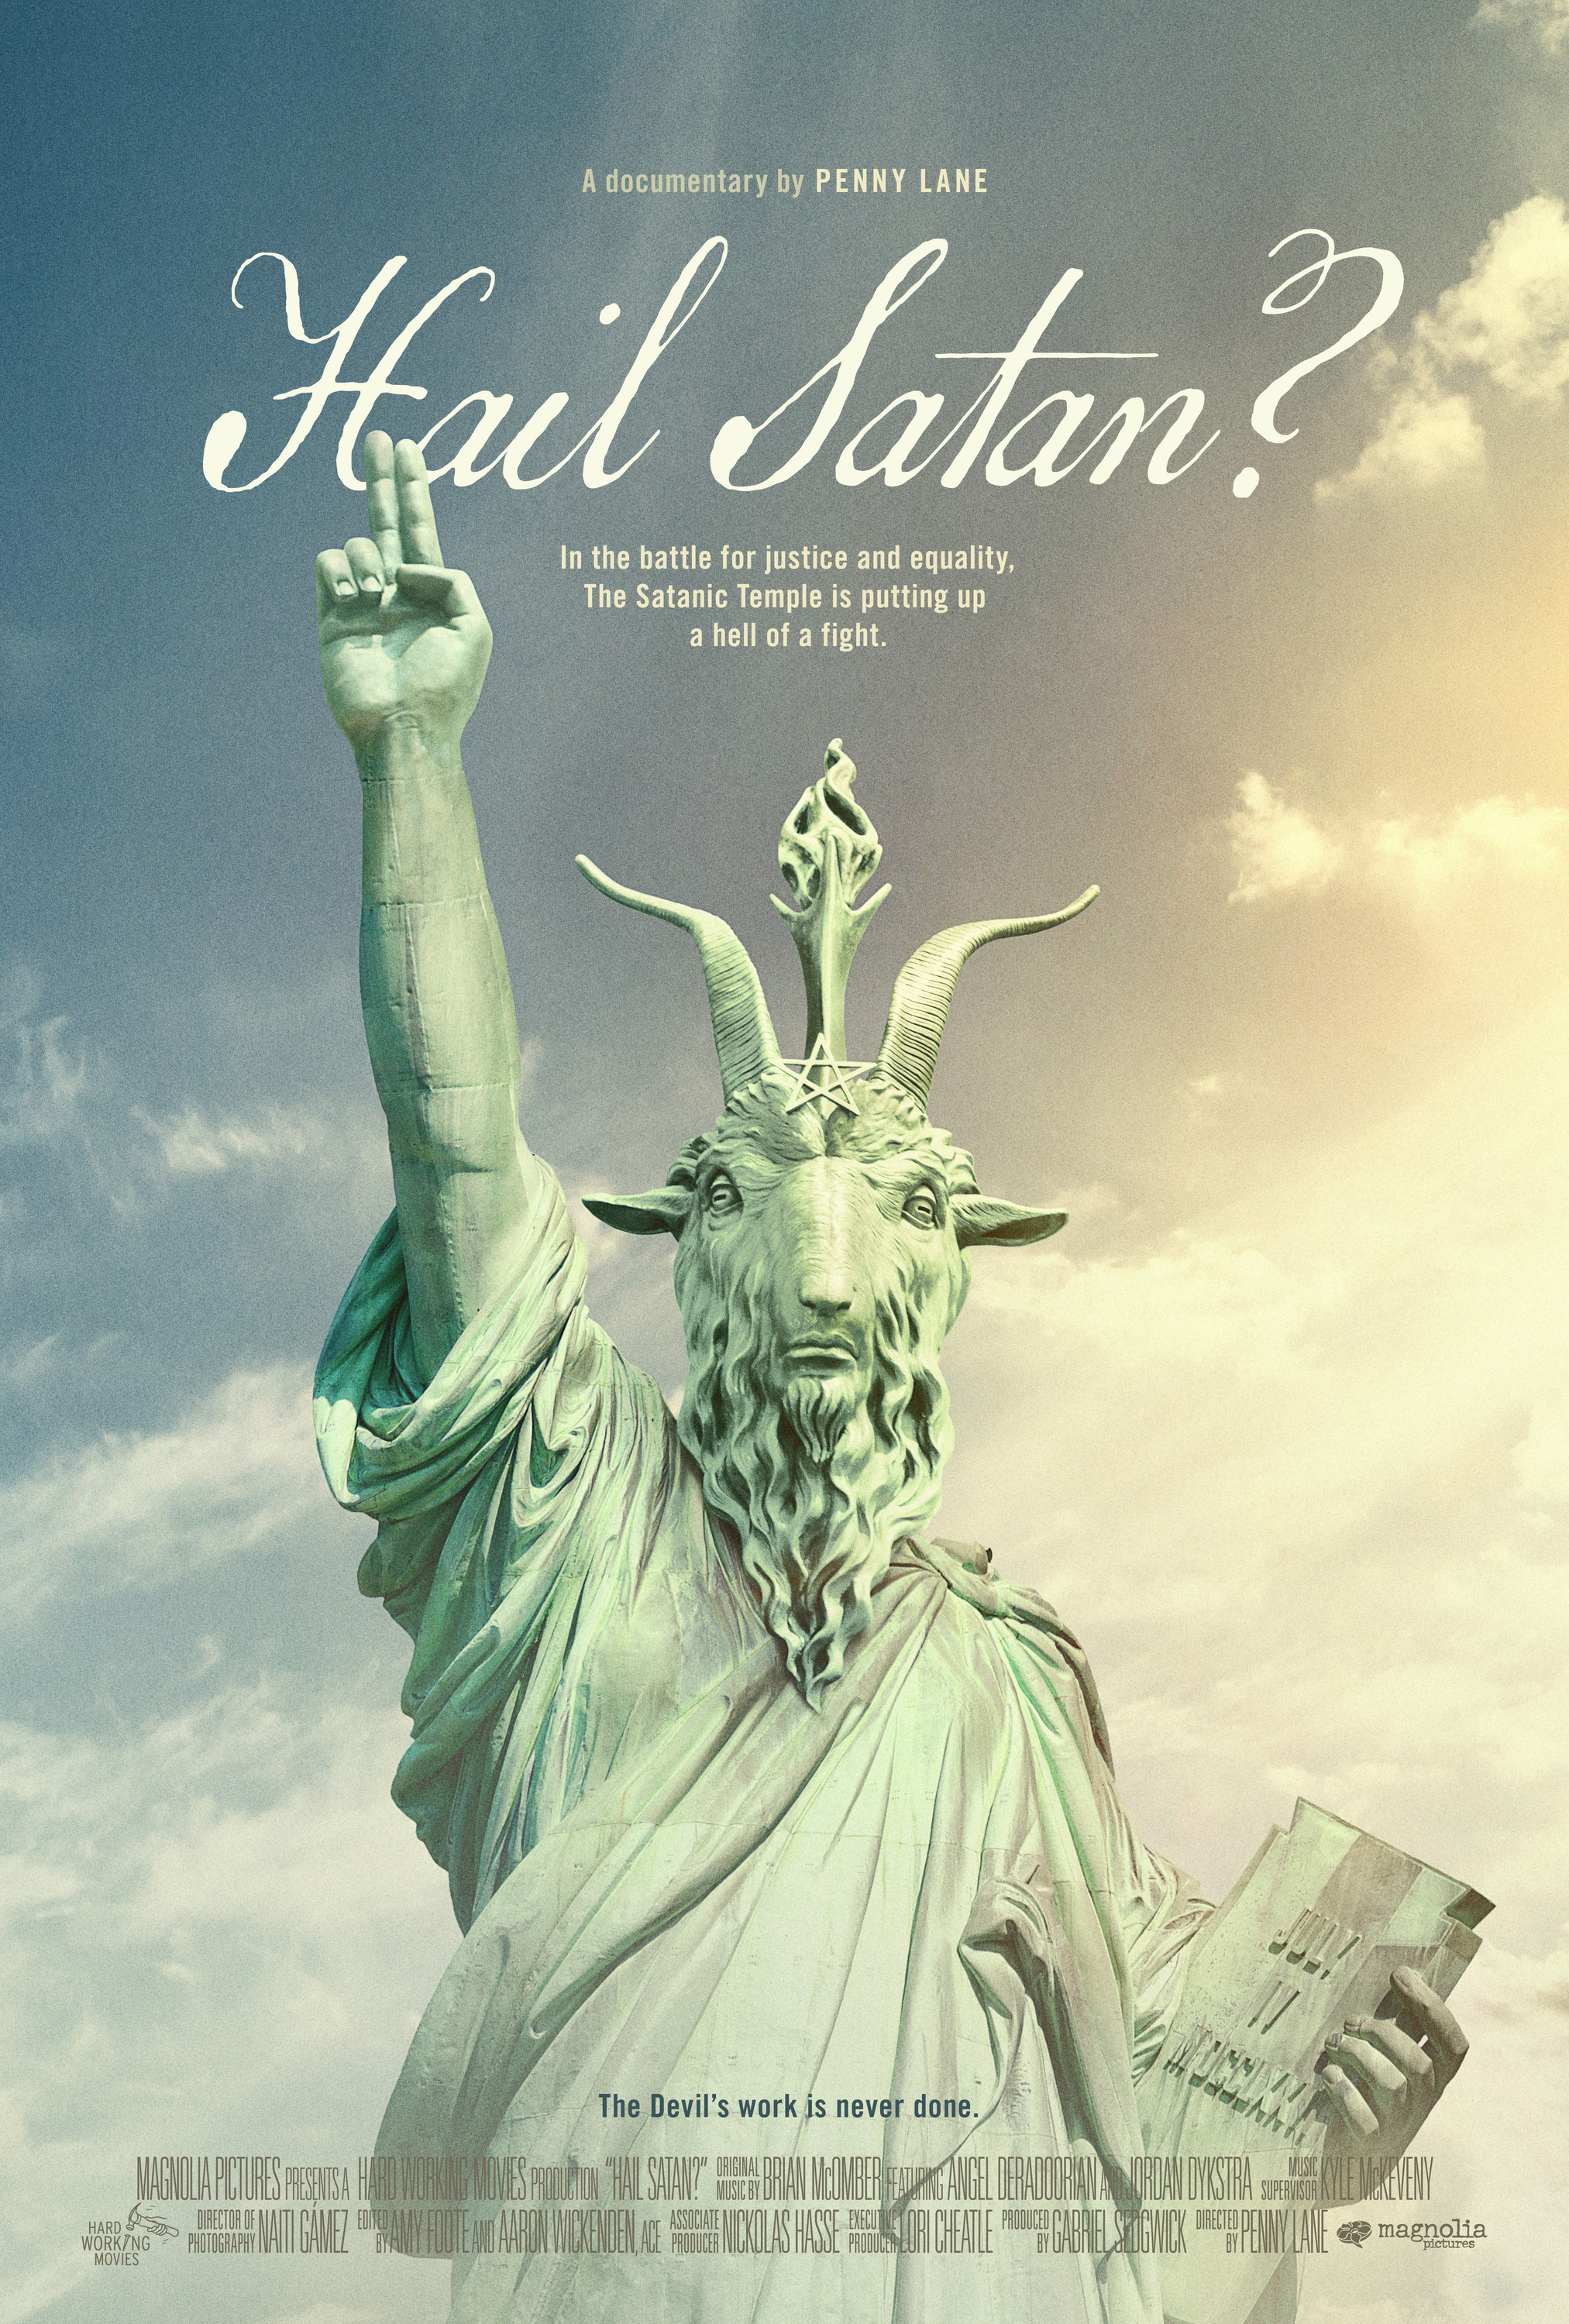 Mega Sized Movie Poster Image for Hail Satan? 